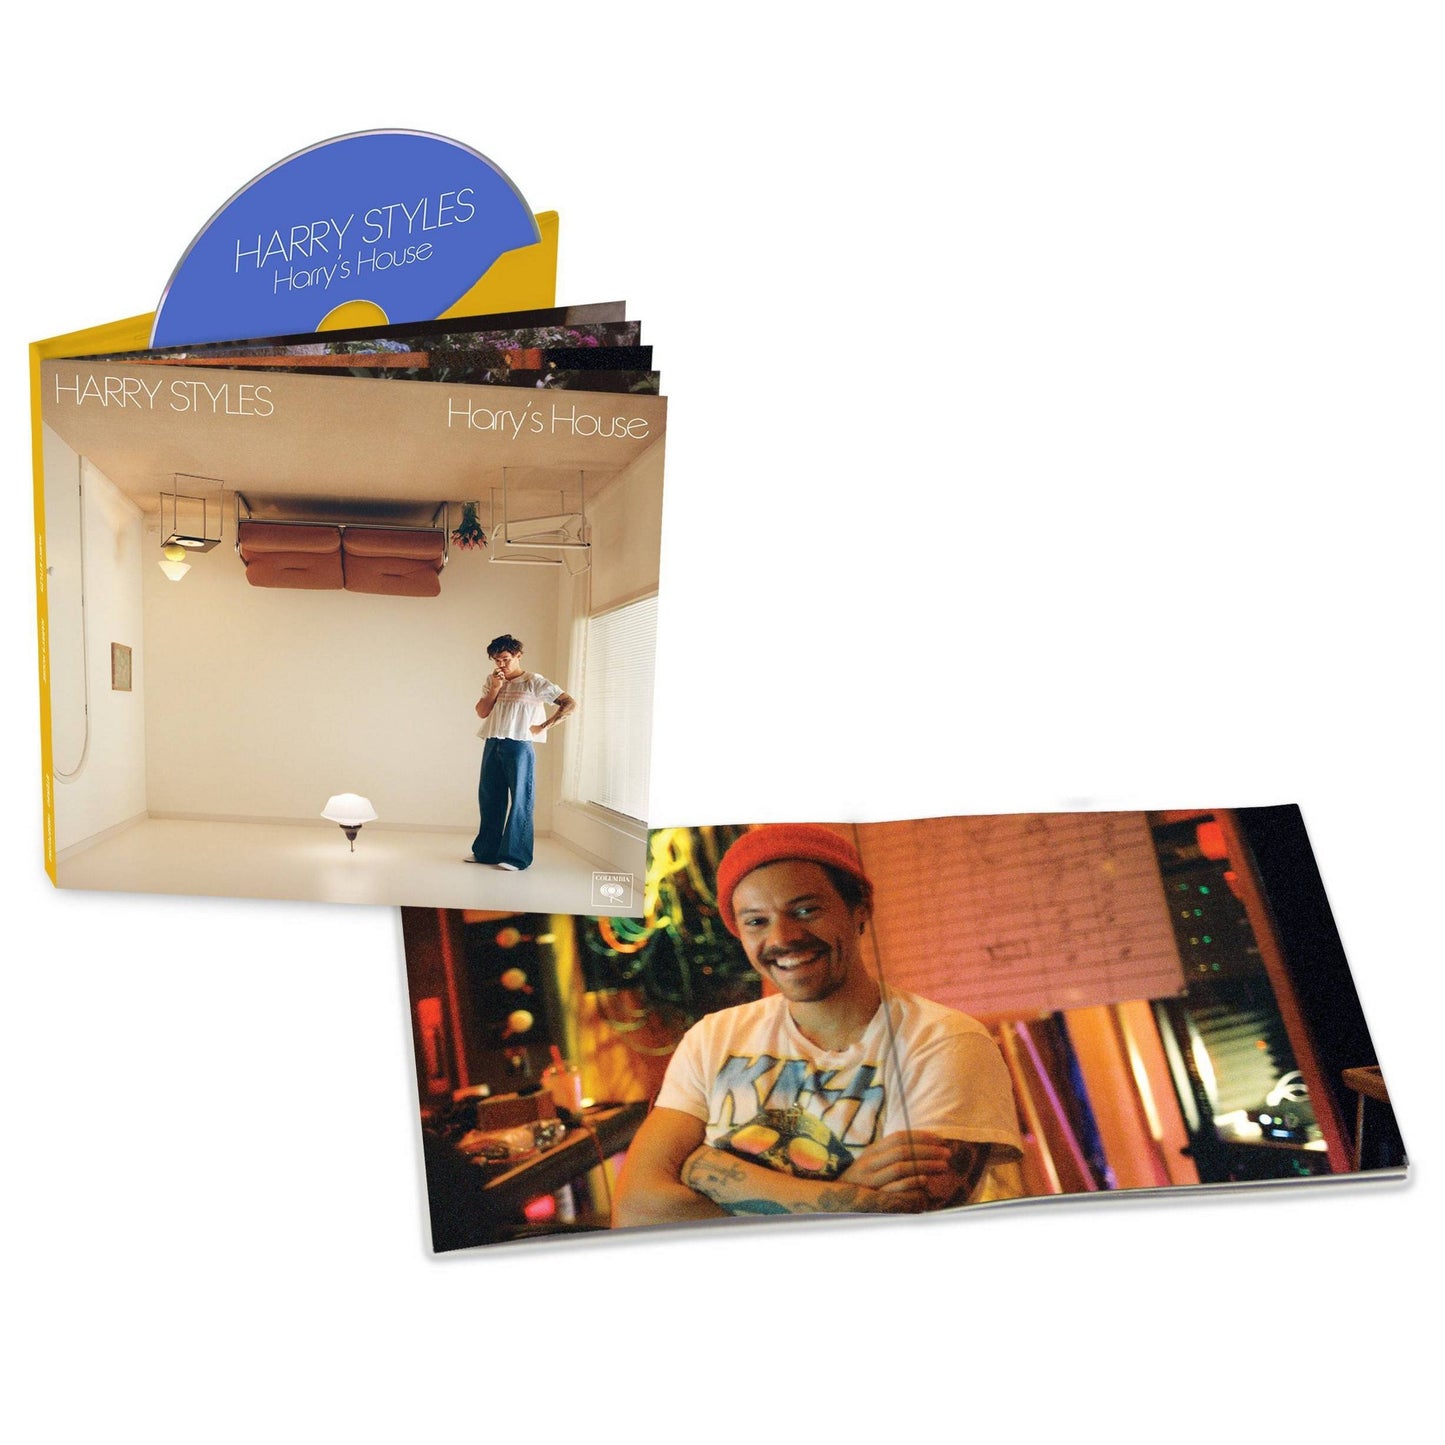 Harry Styles - Harry's House Casebook (Target Exclusive) CD